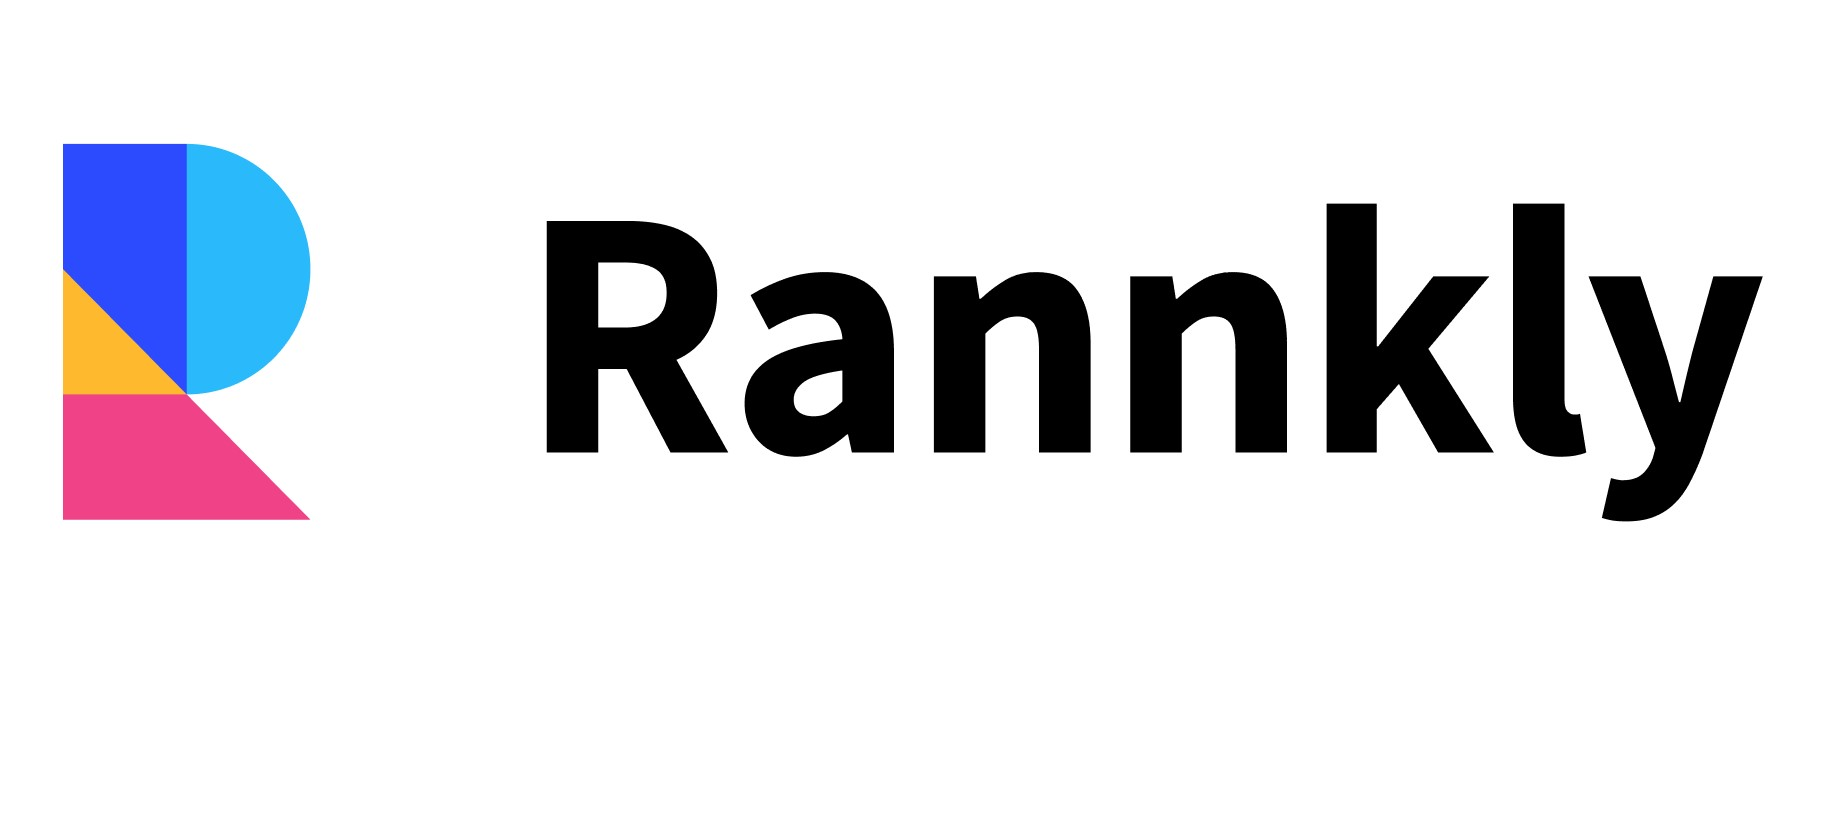 Rannkly sets a new Benchmark 